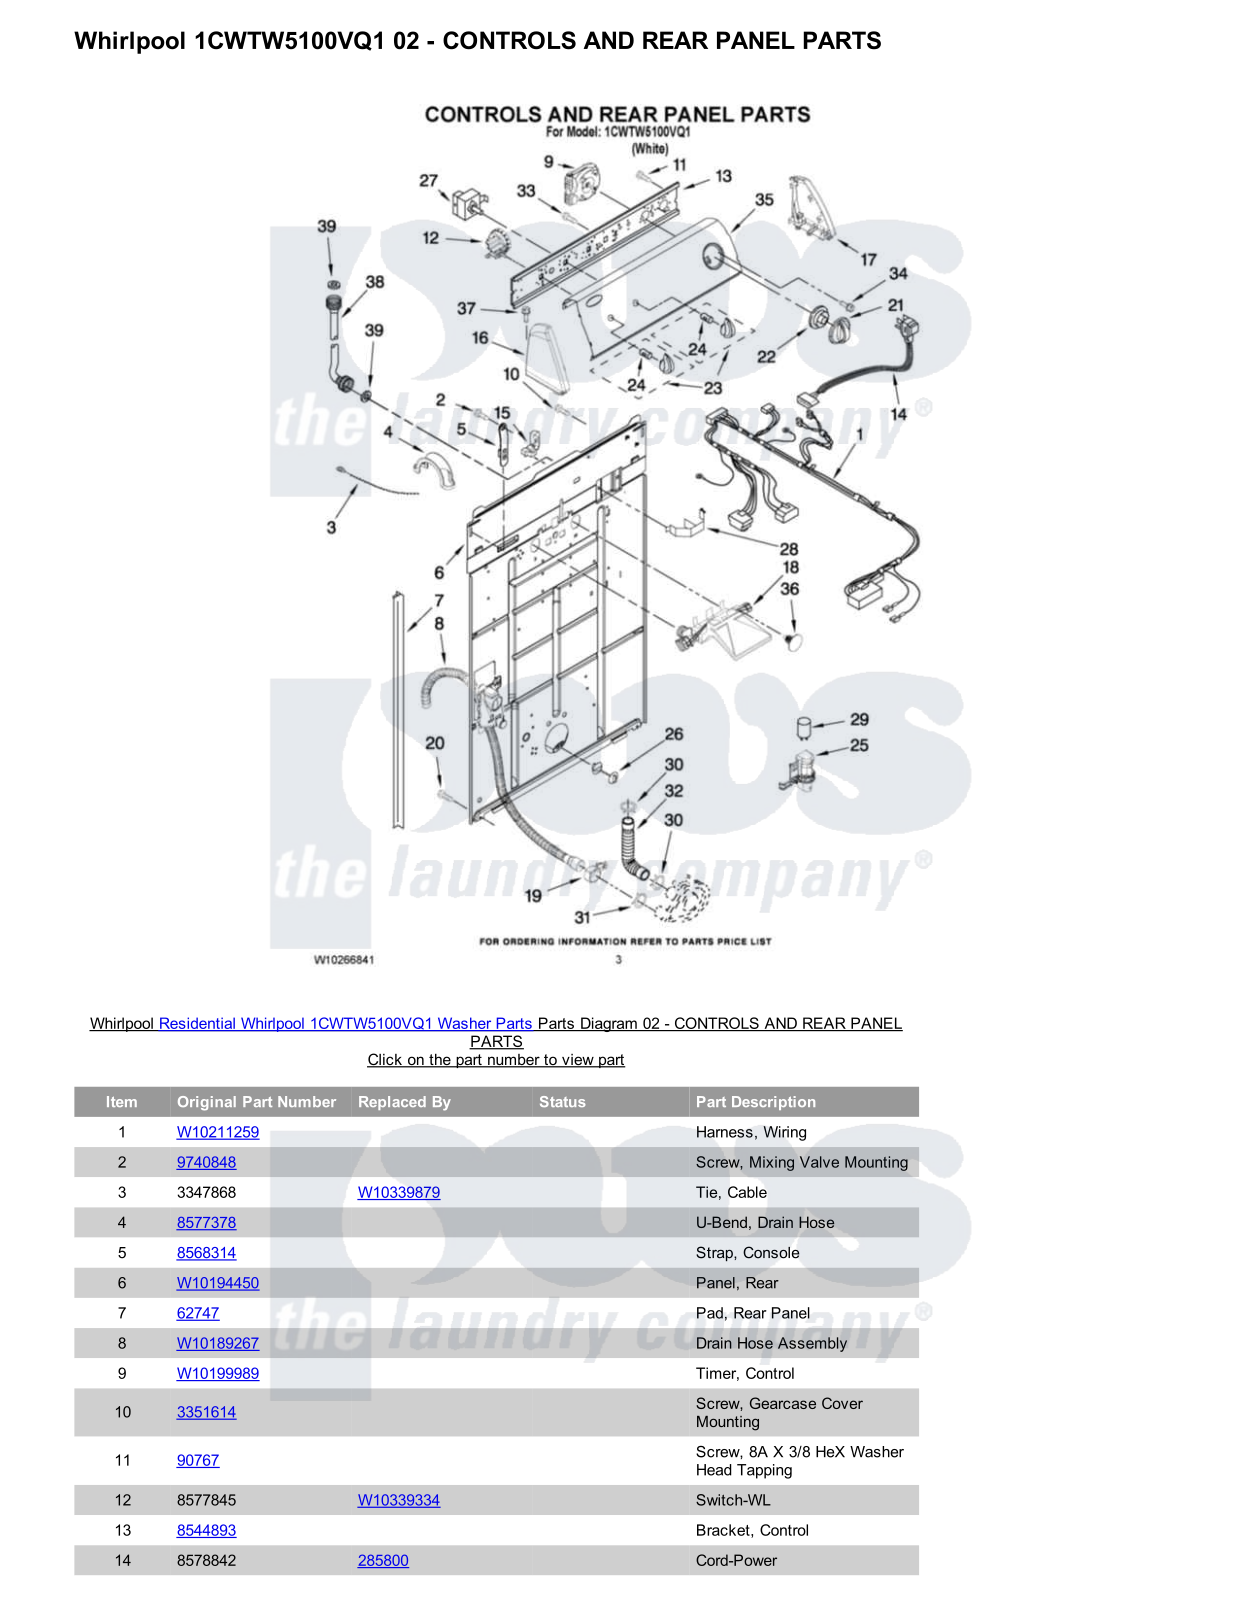 Whirlpool 1CWTW5100VQ1 Parts Diagram